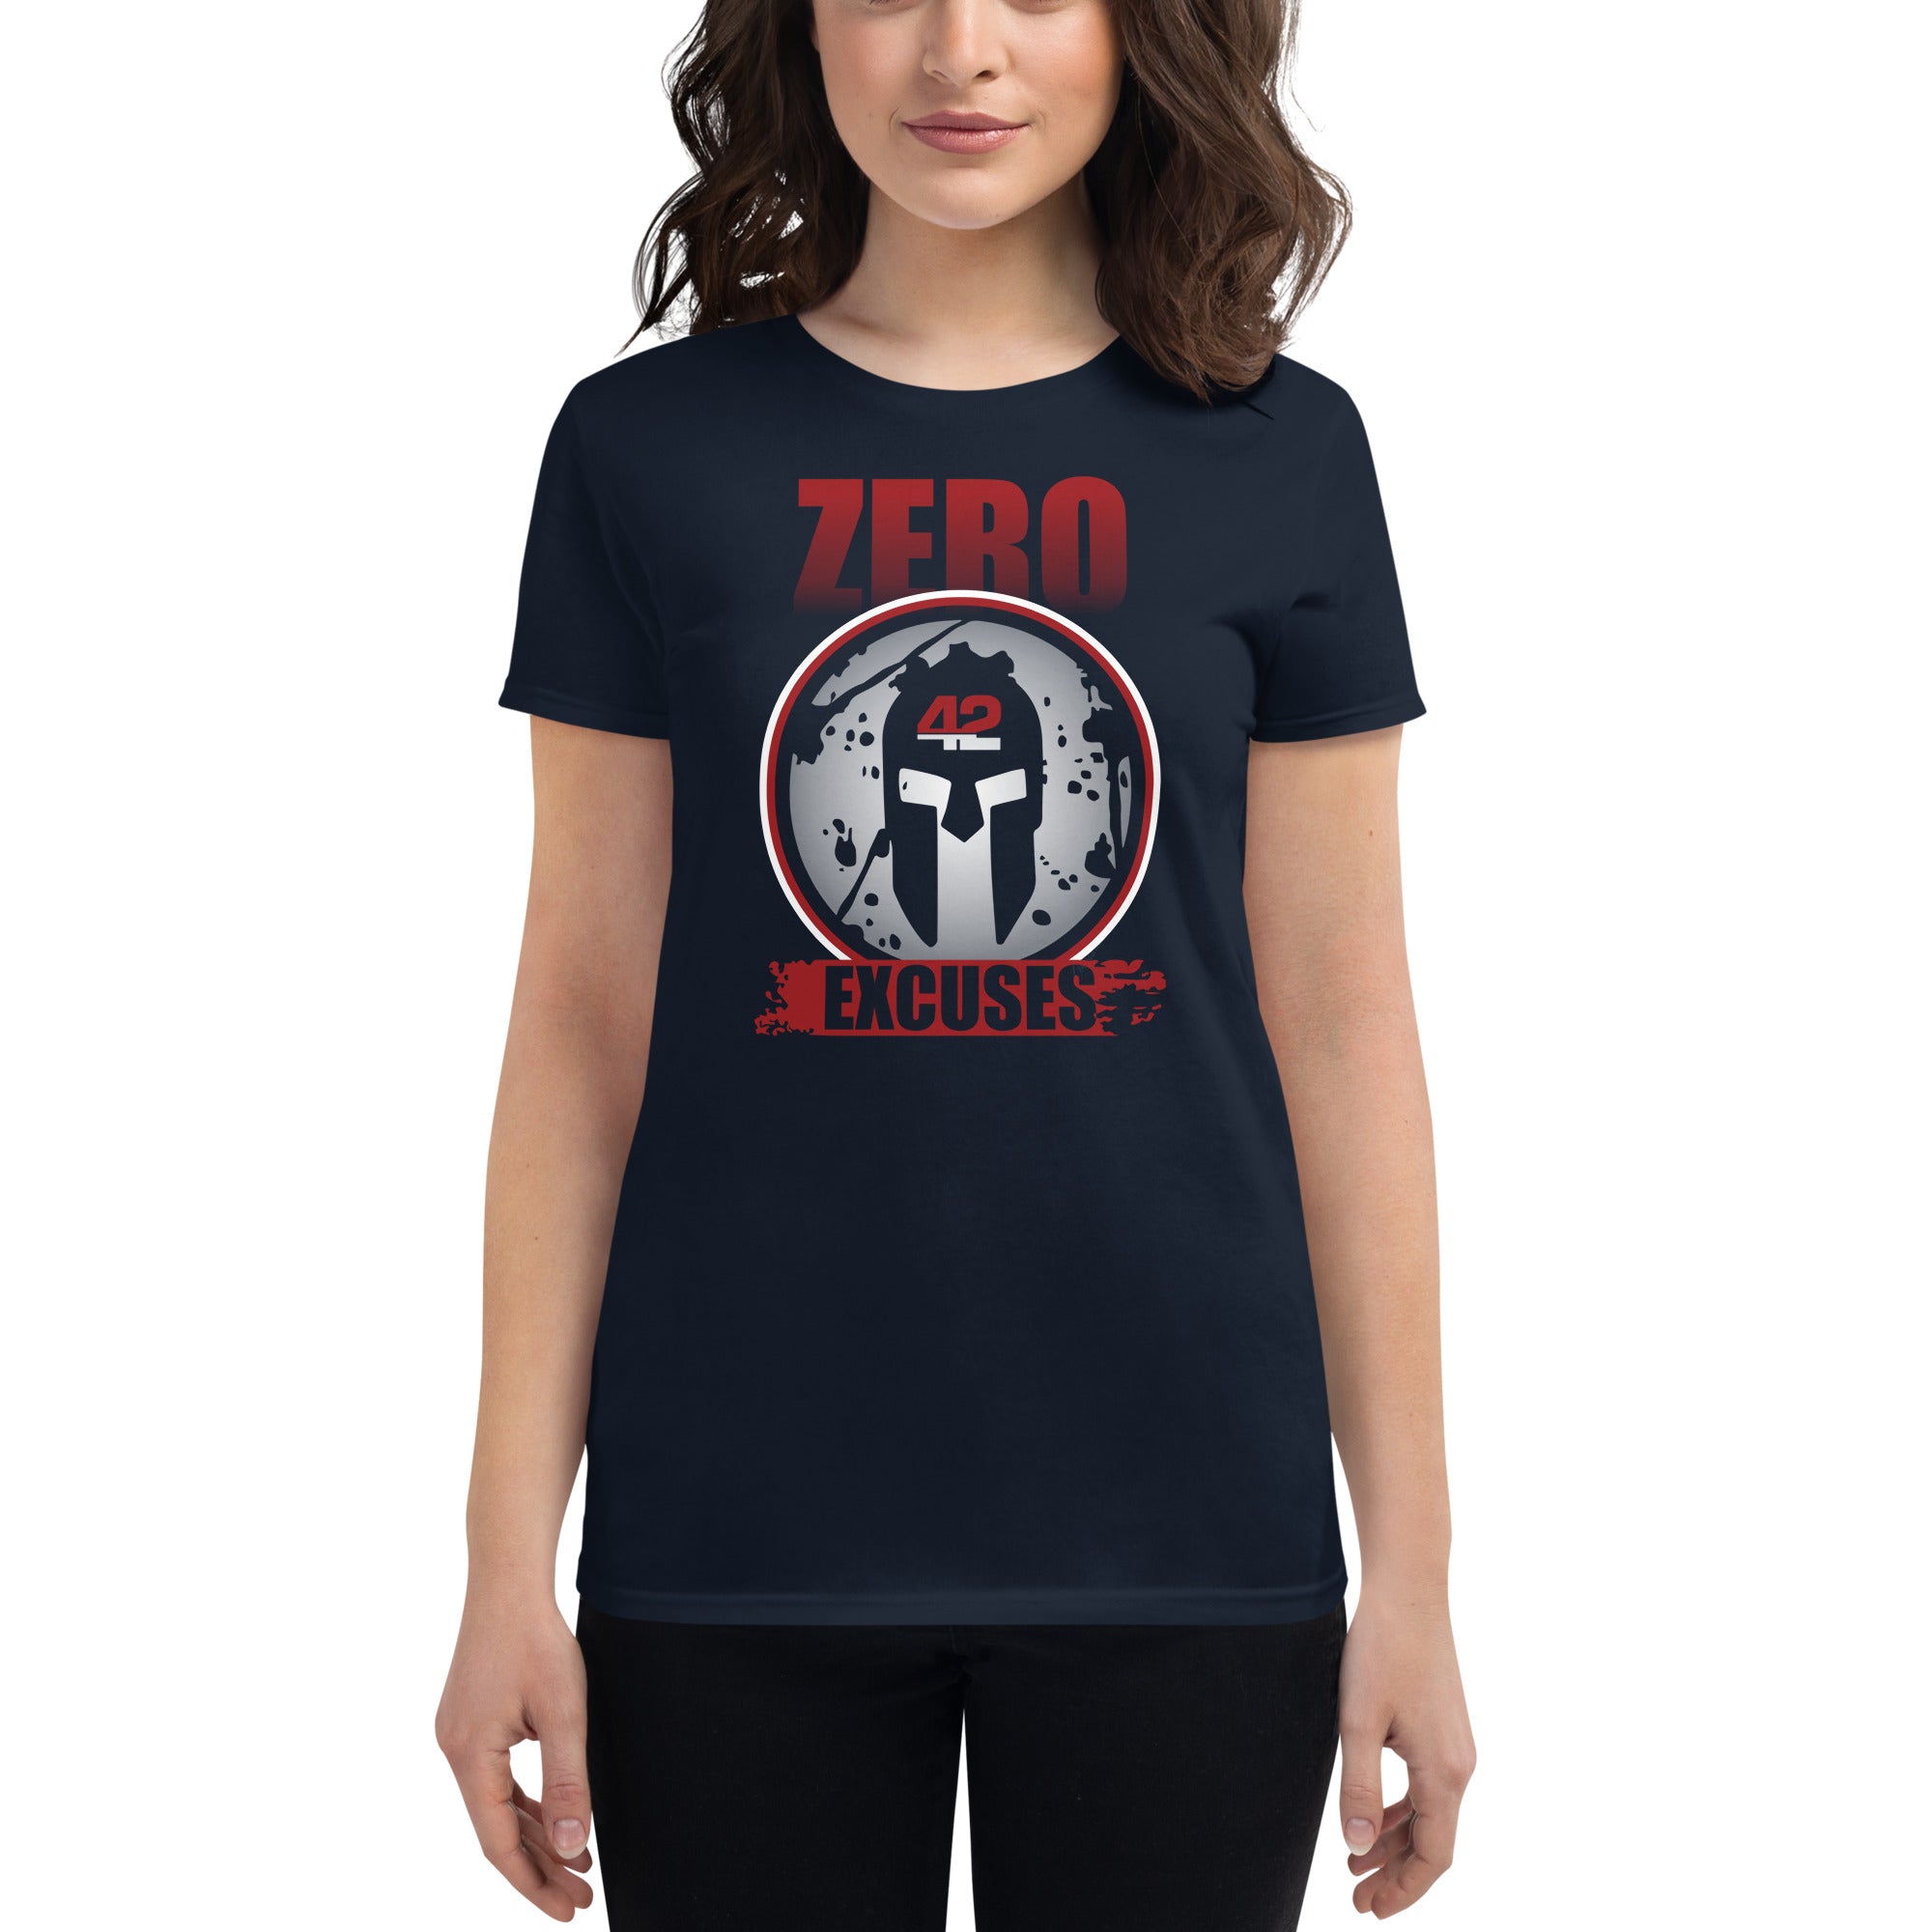 Zero Women's short sleeve t-shirt